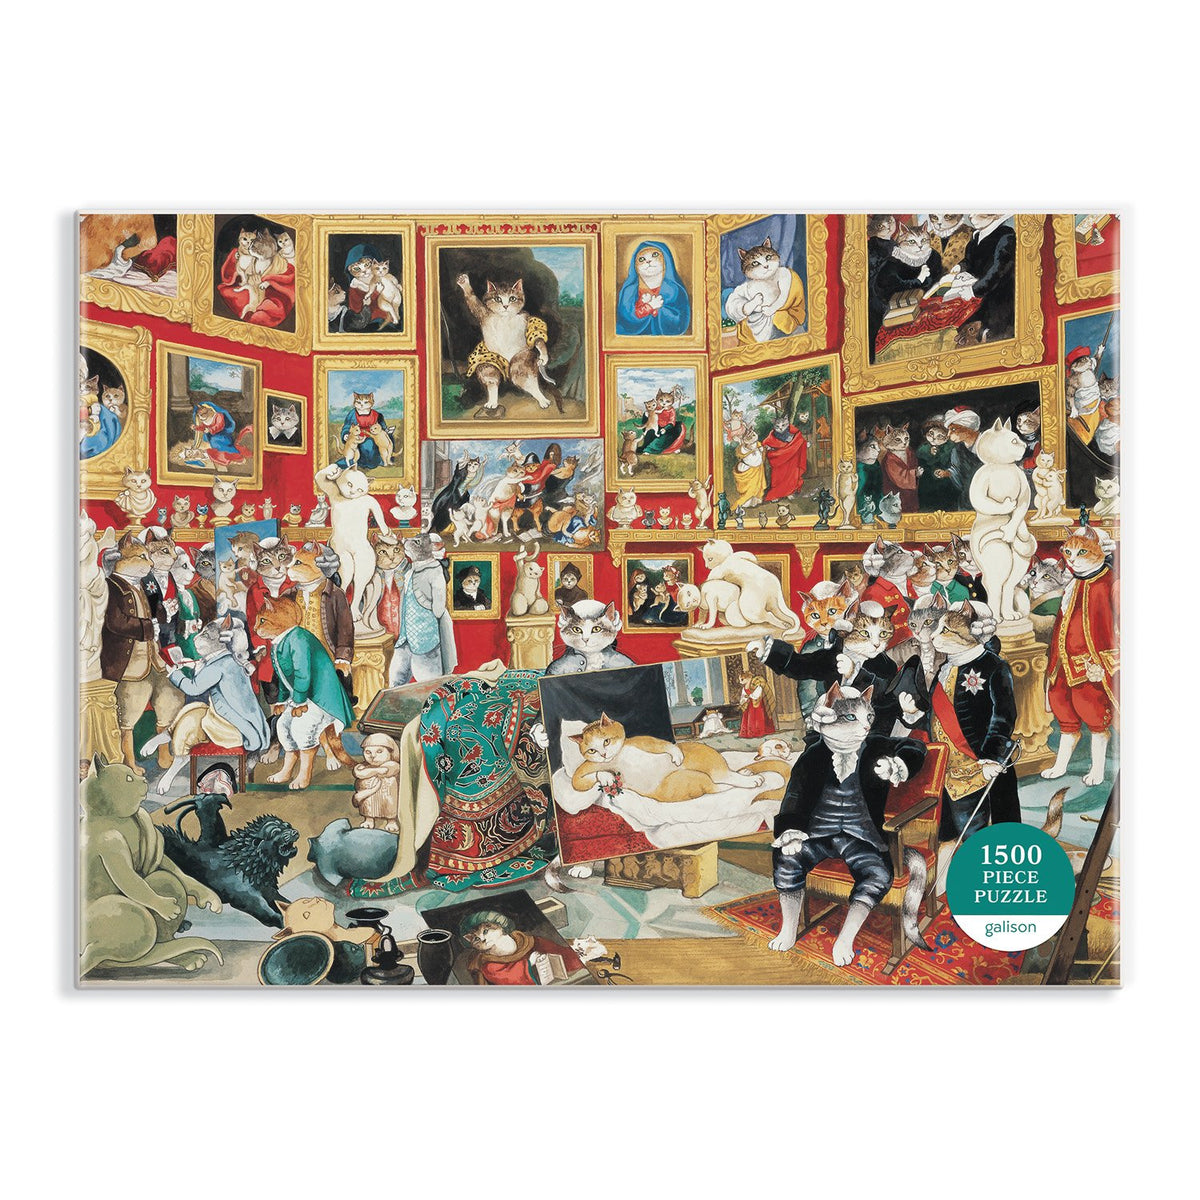 Tribuna of the Uffizi Meowsterpiece of Western Art 1500 Piece Jigsaw Puzzle 1500 Piece Puzzles Susan Herbert 